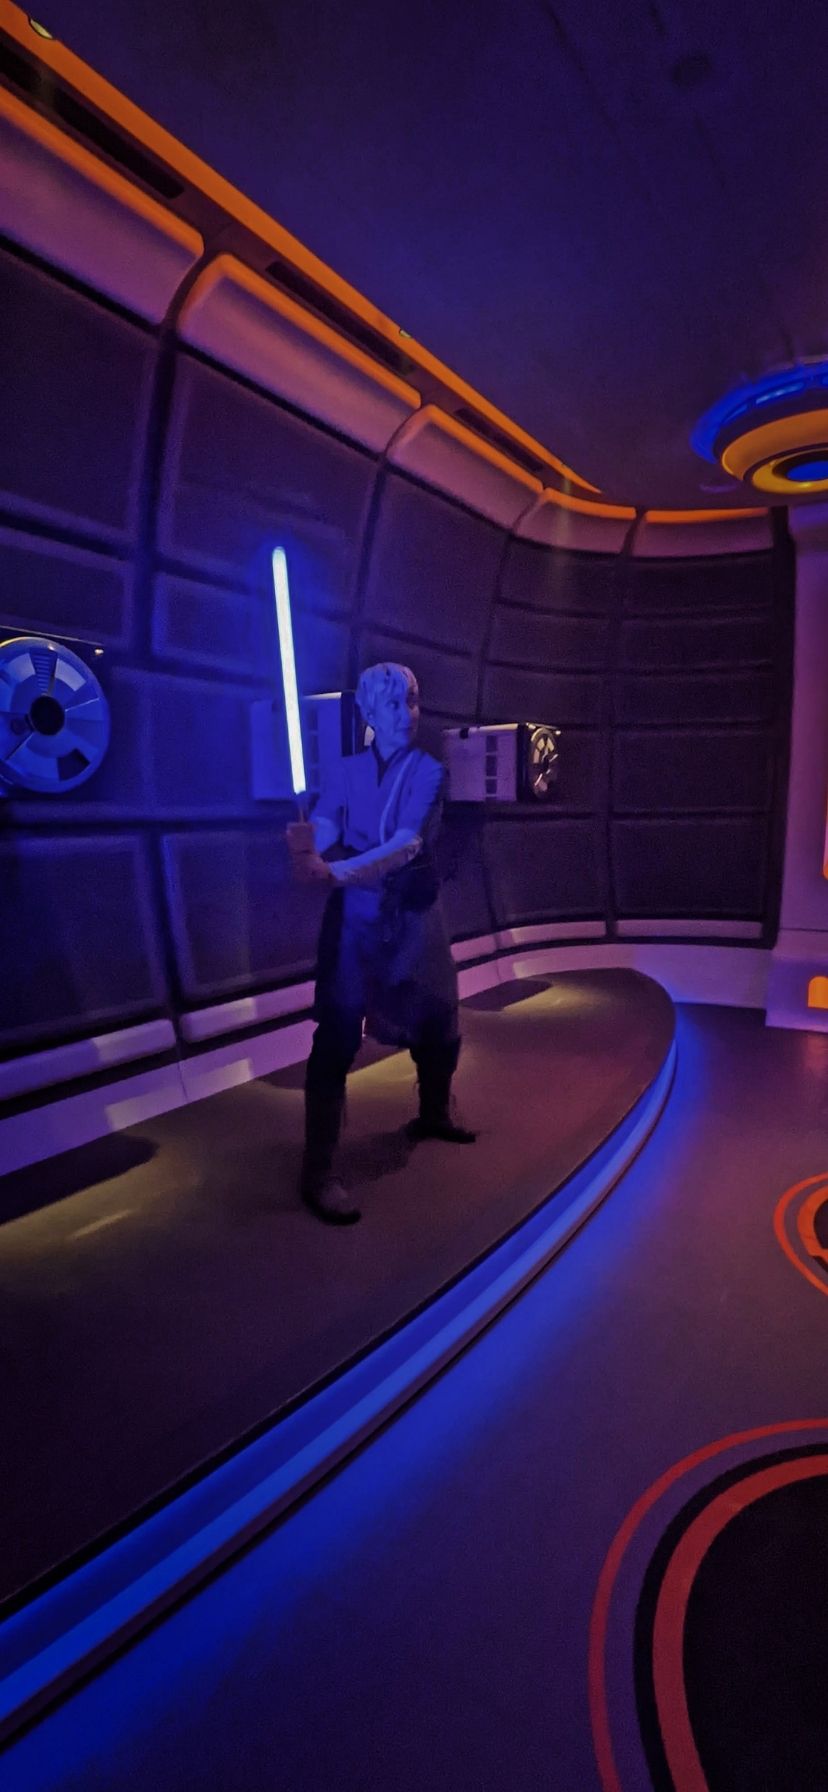 Lightsaber Traininer at Star Wars Galactic Starcruiser